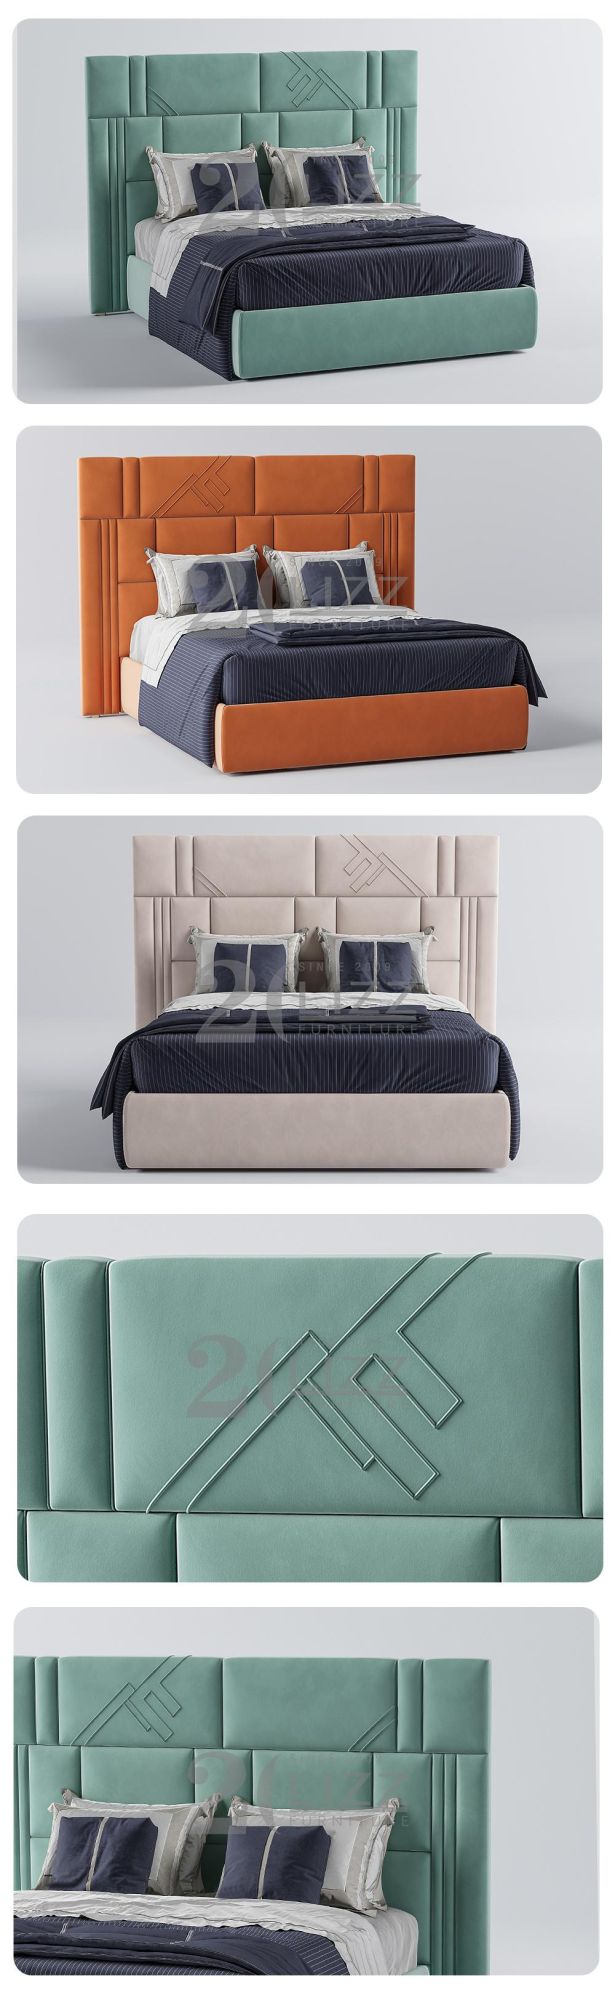 Italian High End Luxury Home Hotel Bedroom Furniture Set Popular Valia Fabric King Size Bed